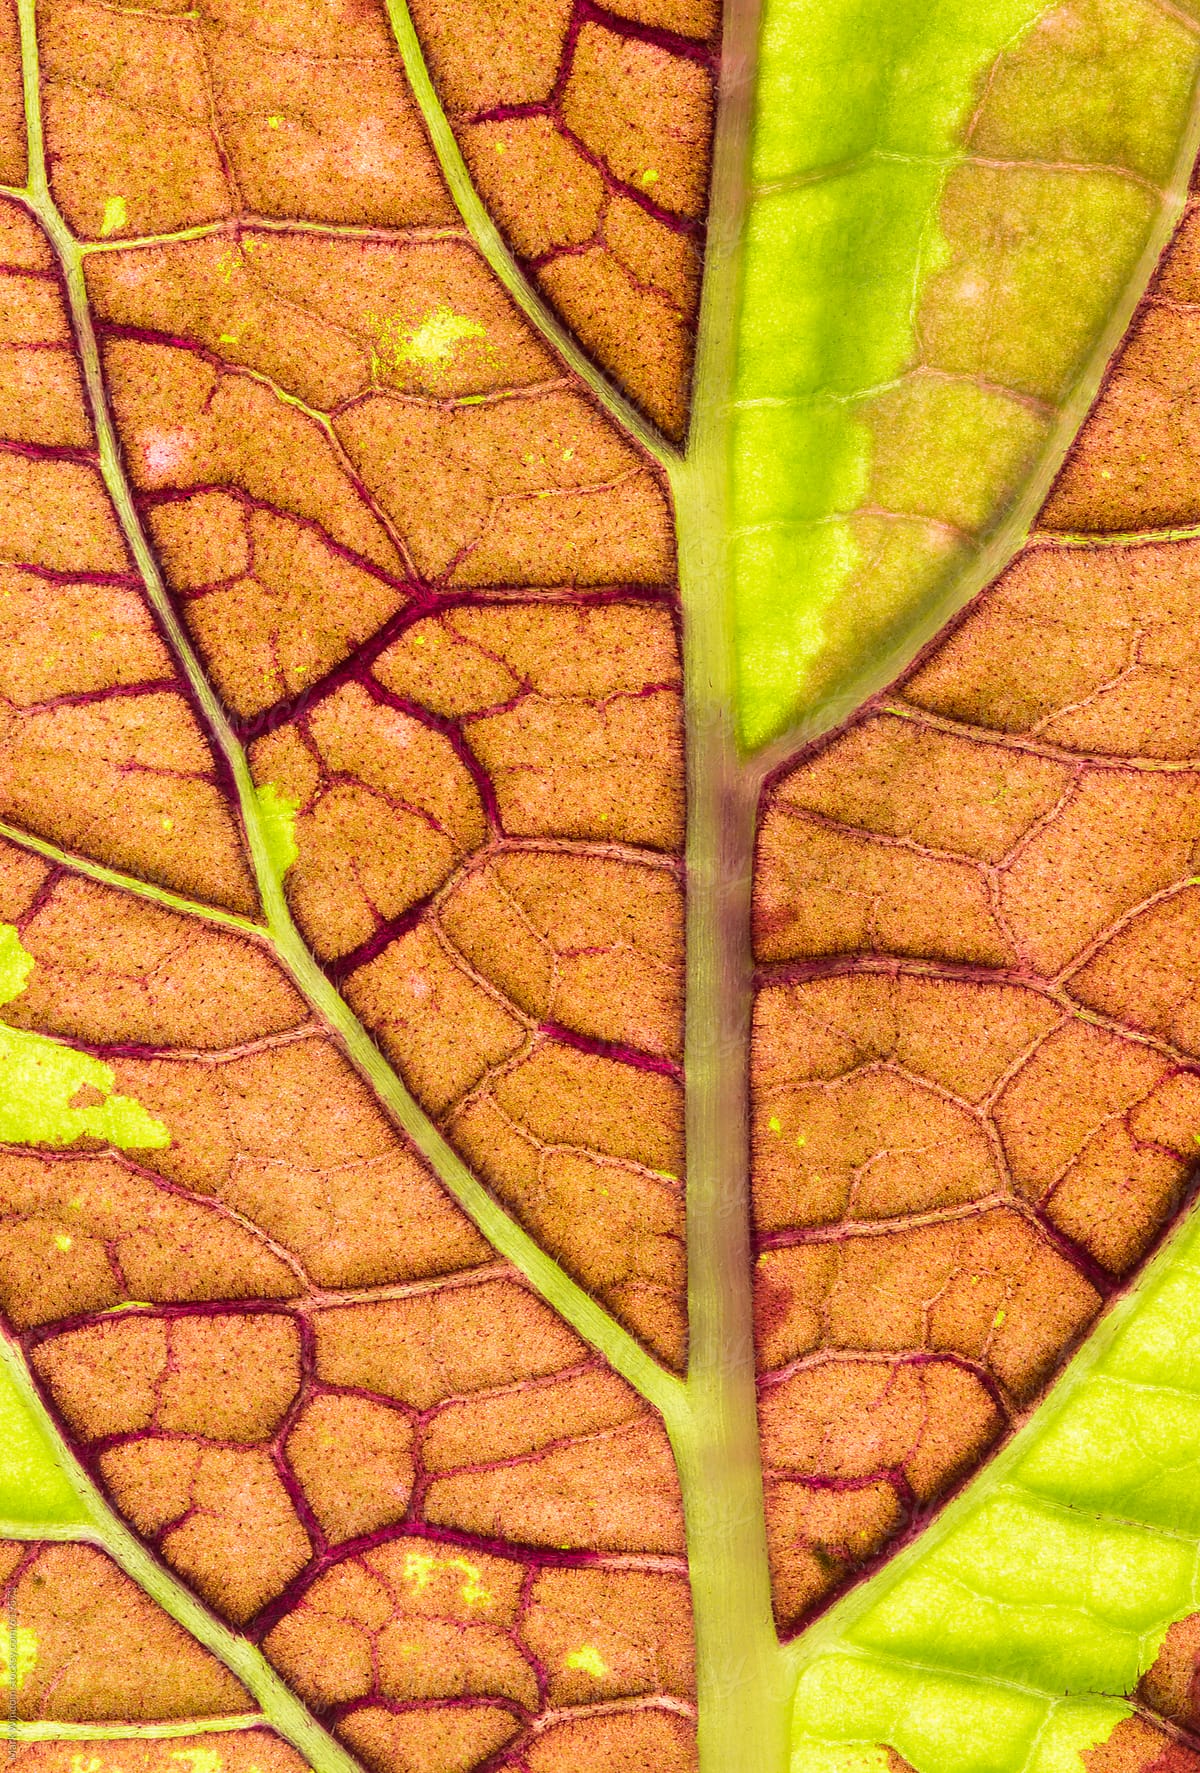 Macro photograph of a backlit coleus leaf